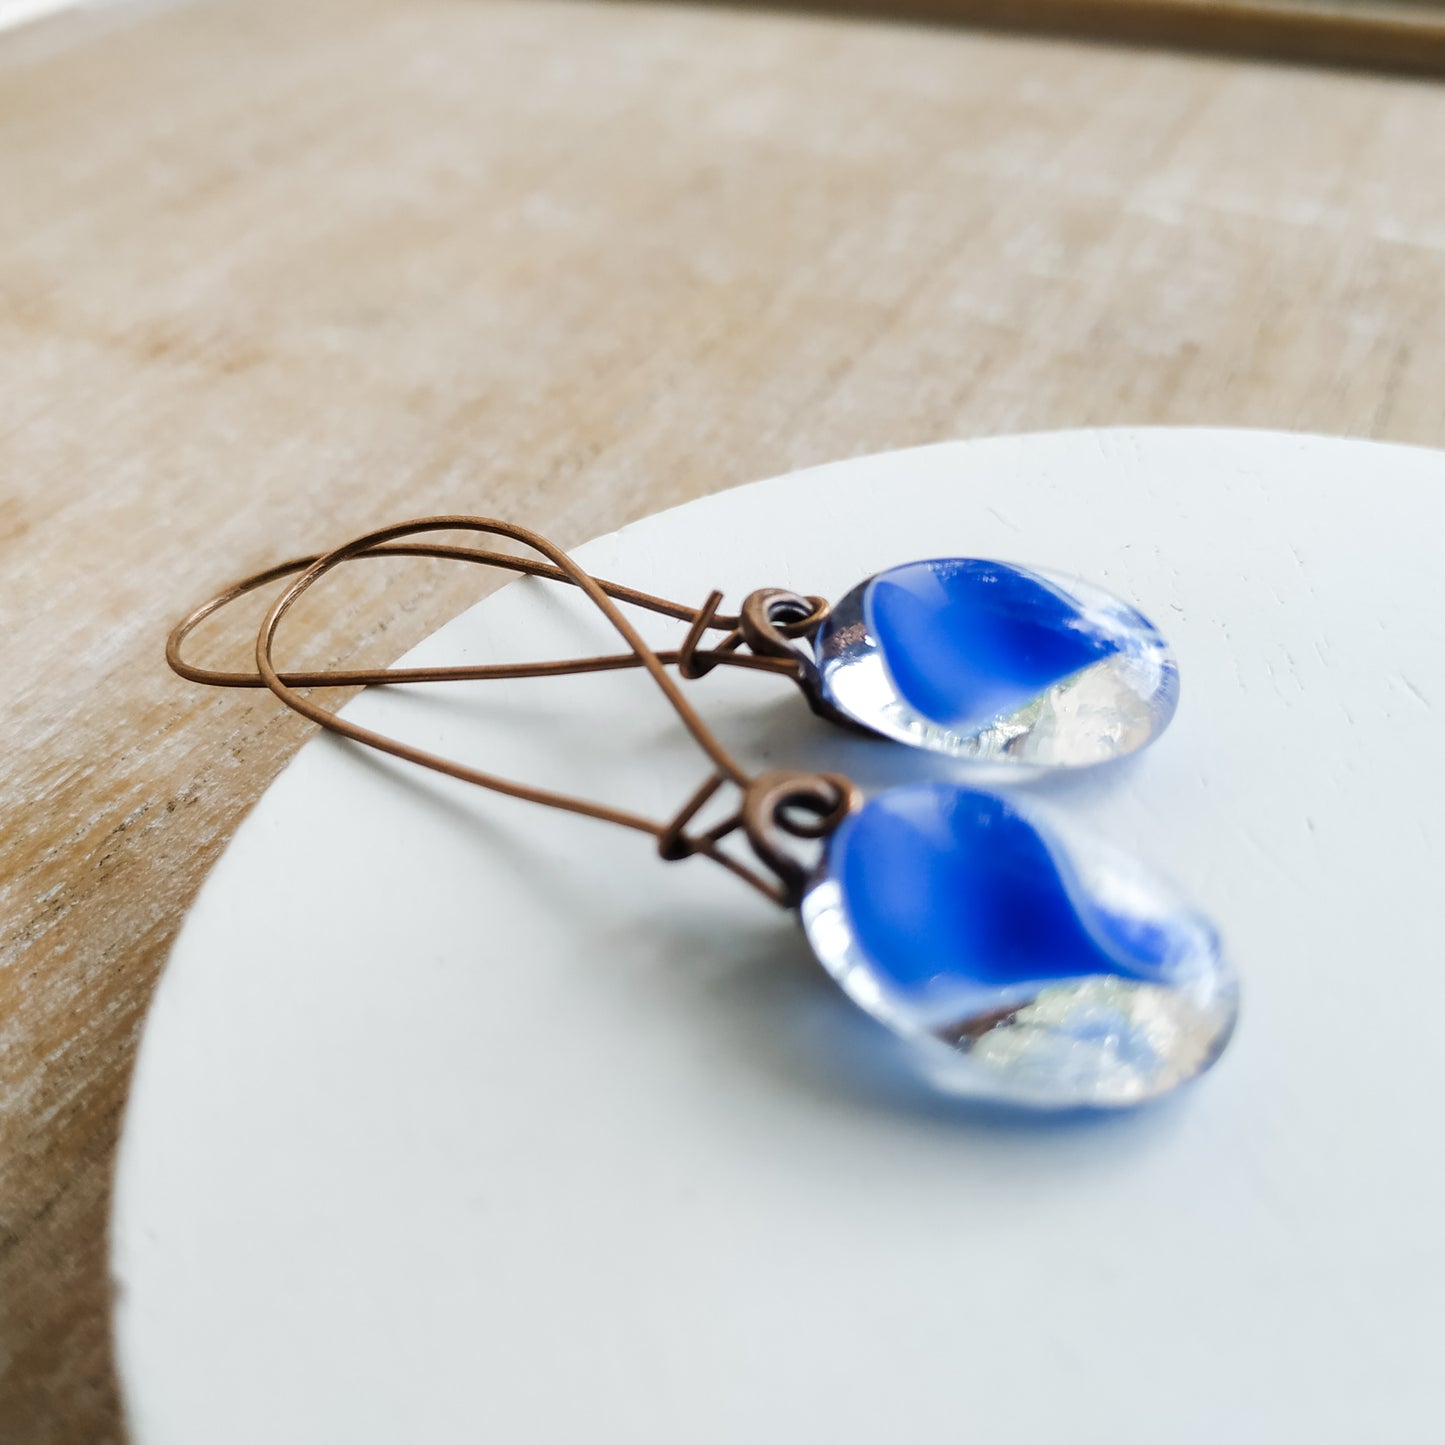 Blue glass earrings lying on a white circle 